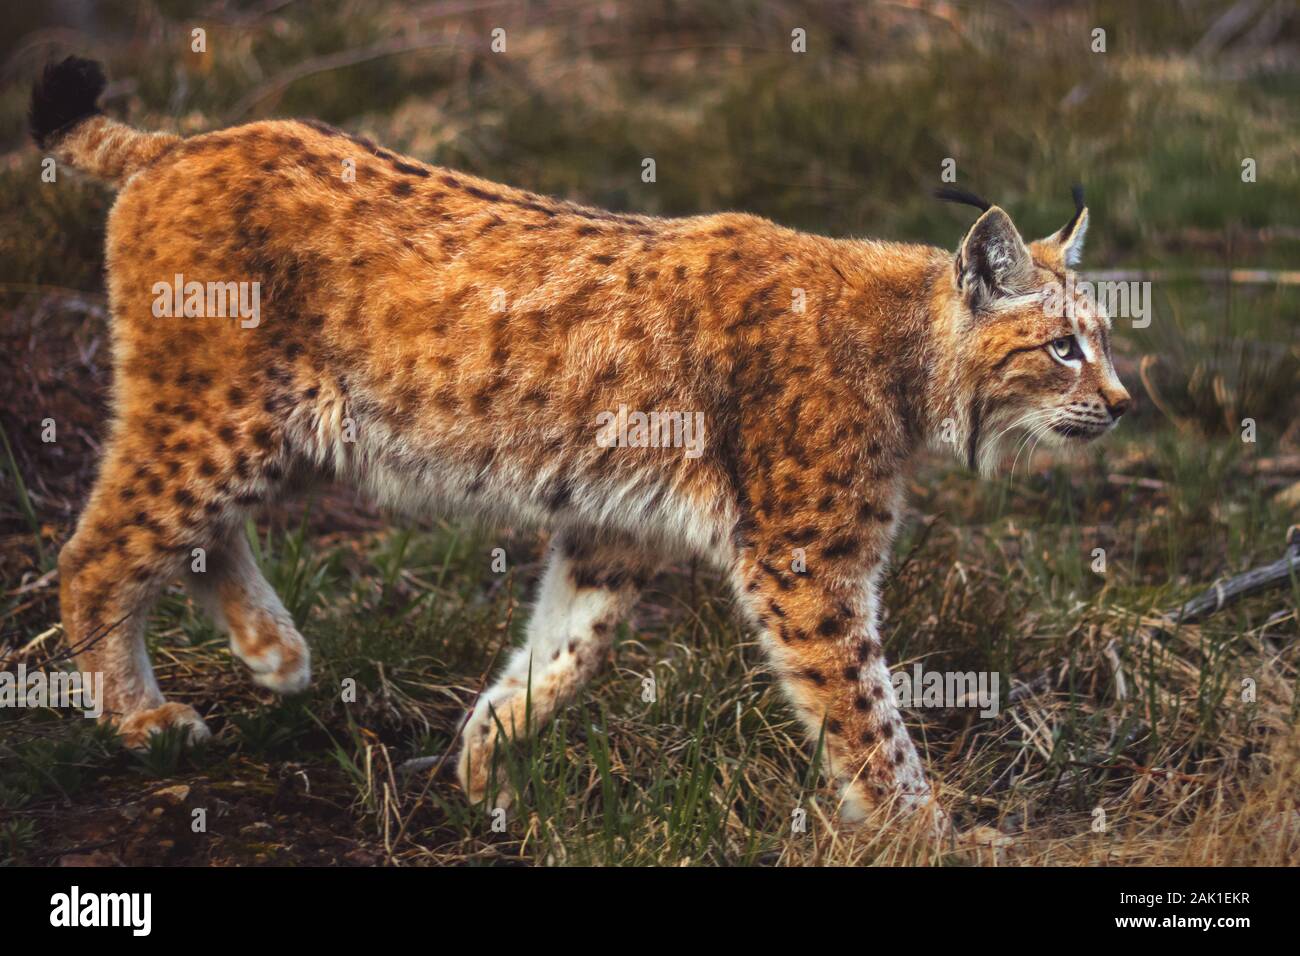 Lynx (felino bestia - lince euroasiático) caminando en el Bosque de Bohemia, vista lateral Foto de stock